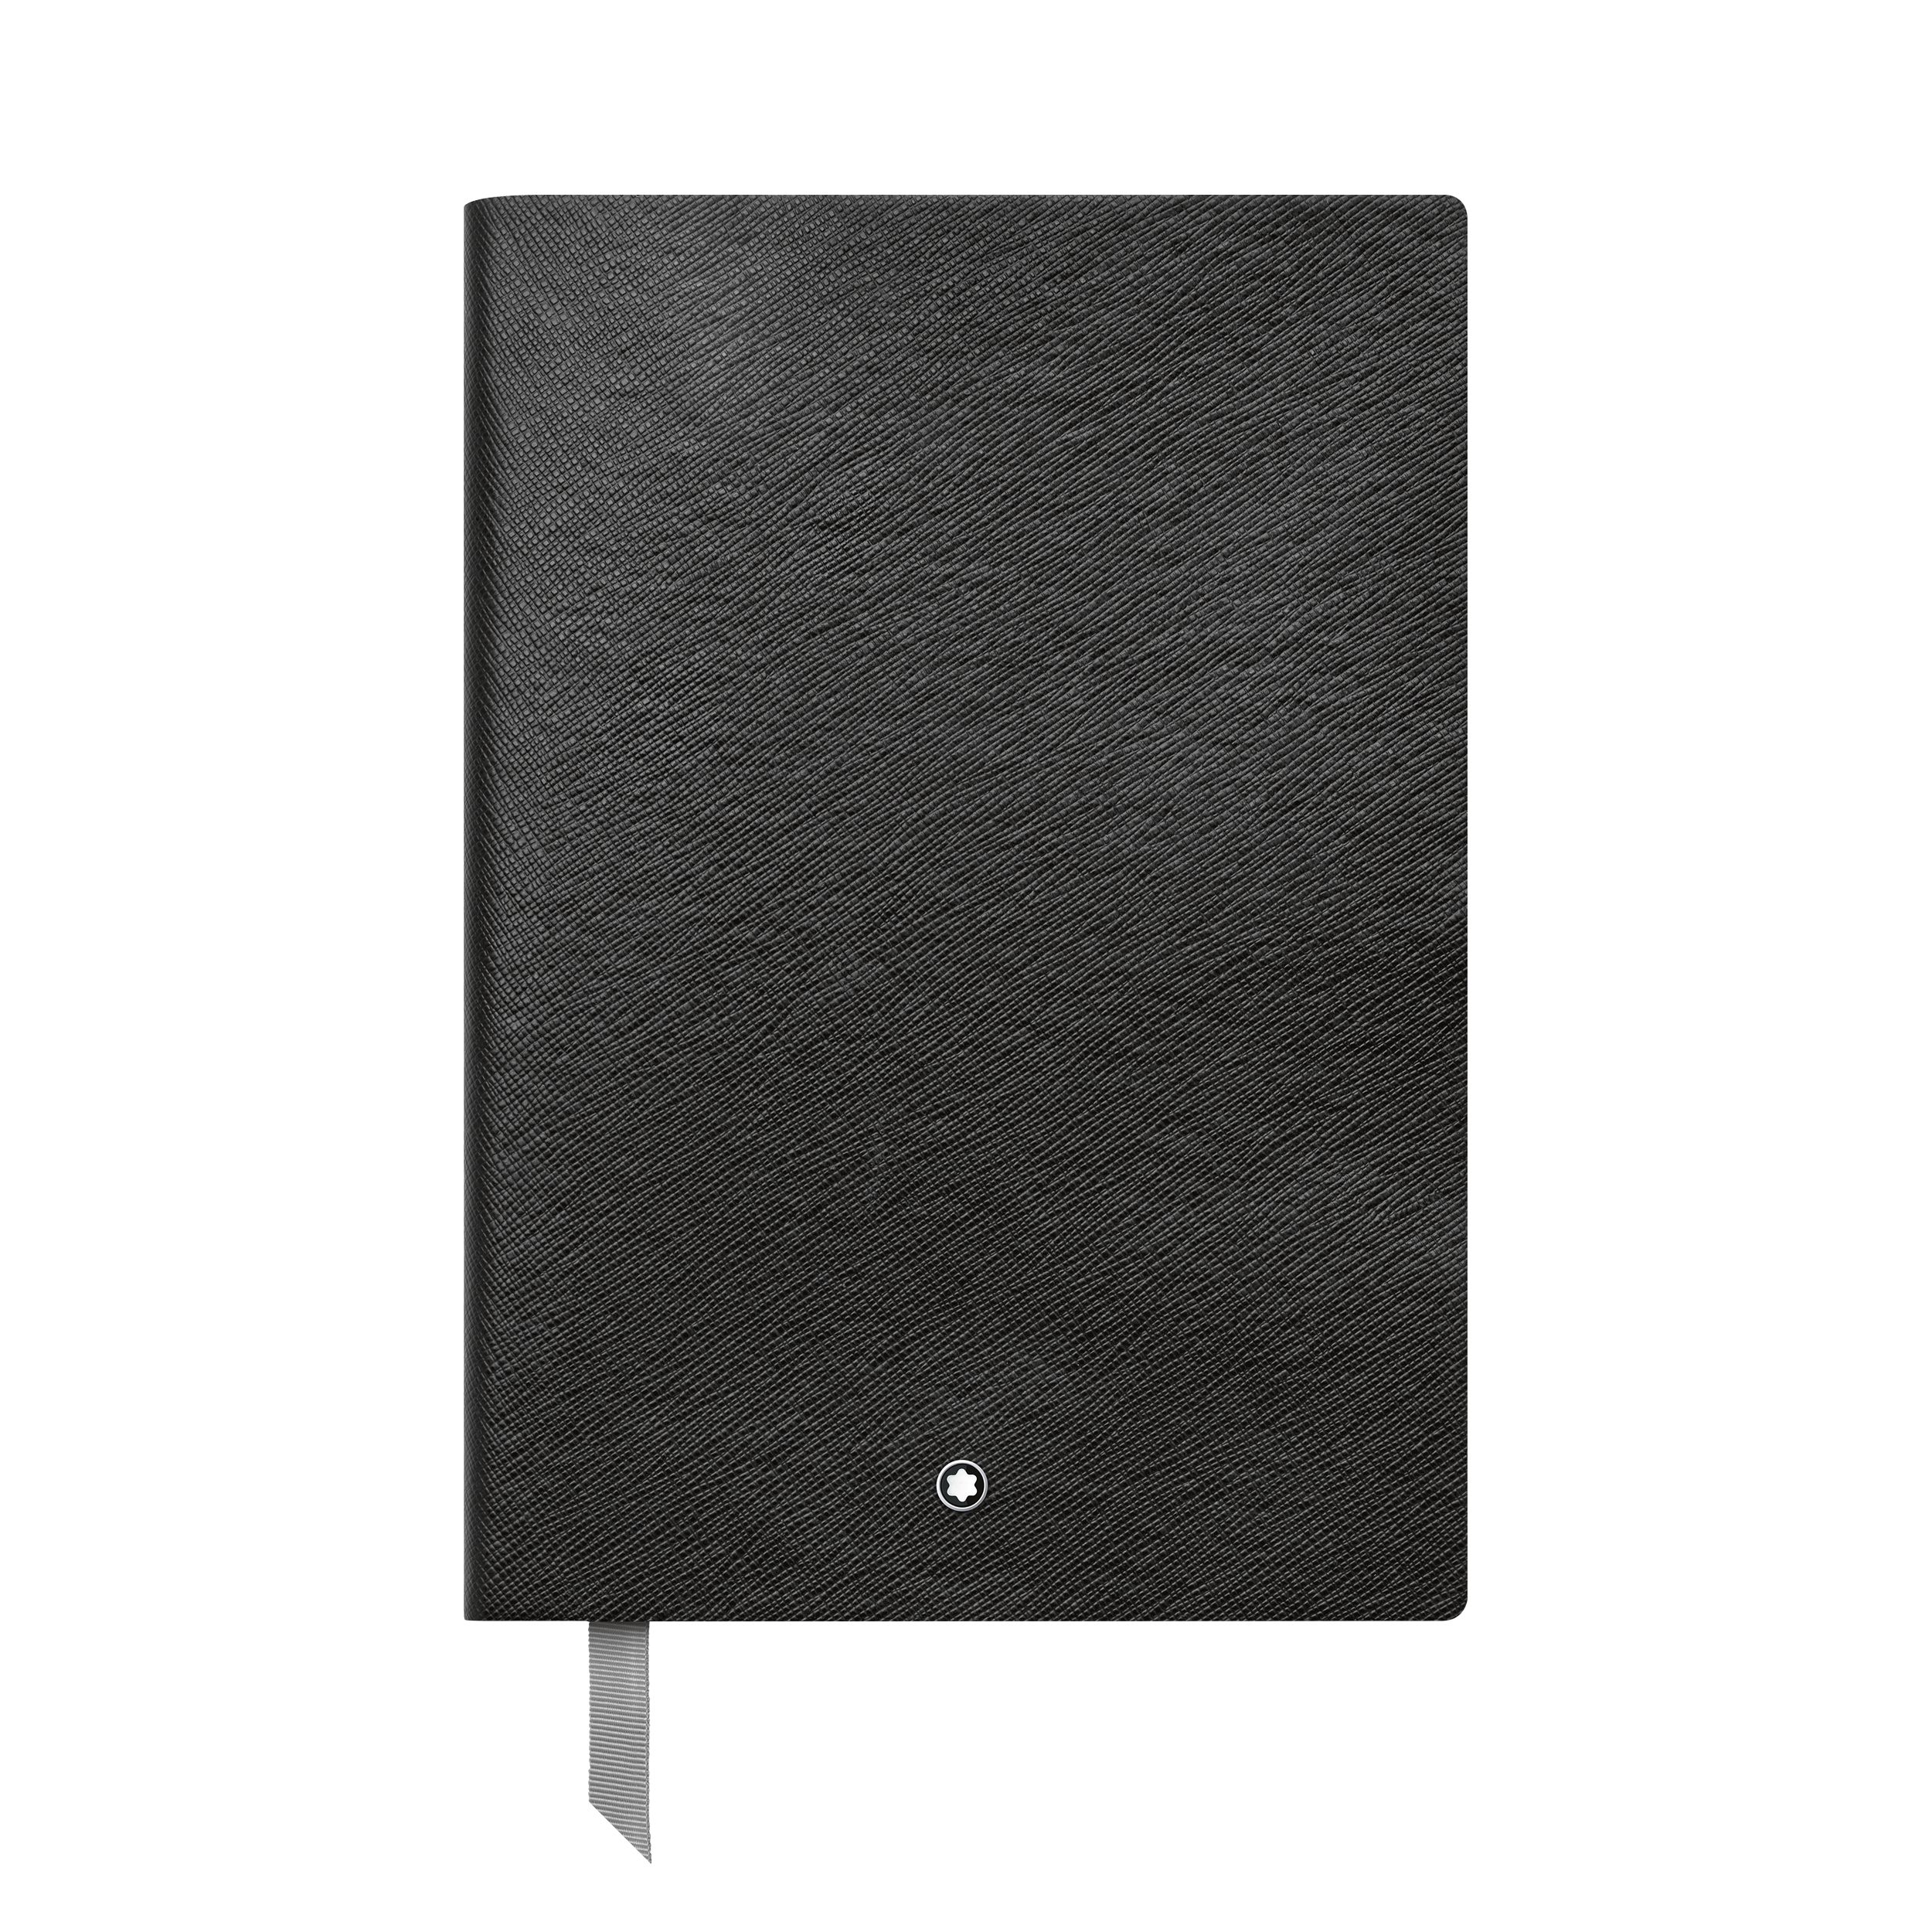 Montblanc Fine Stationery Notebook #146 Black, lined, image 1